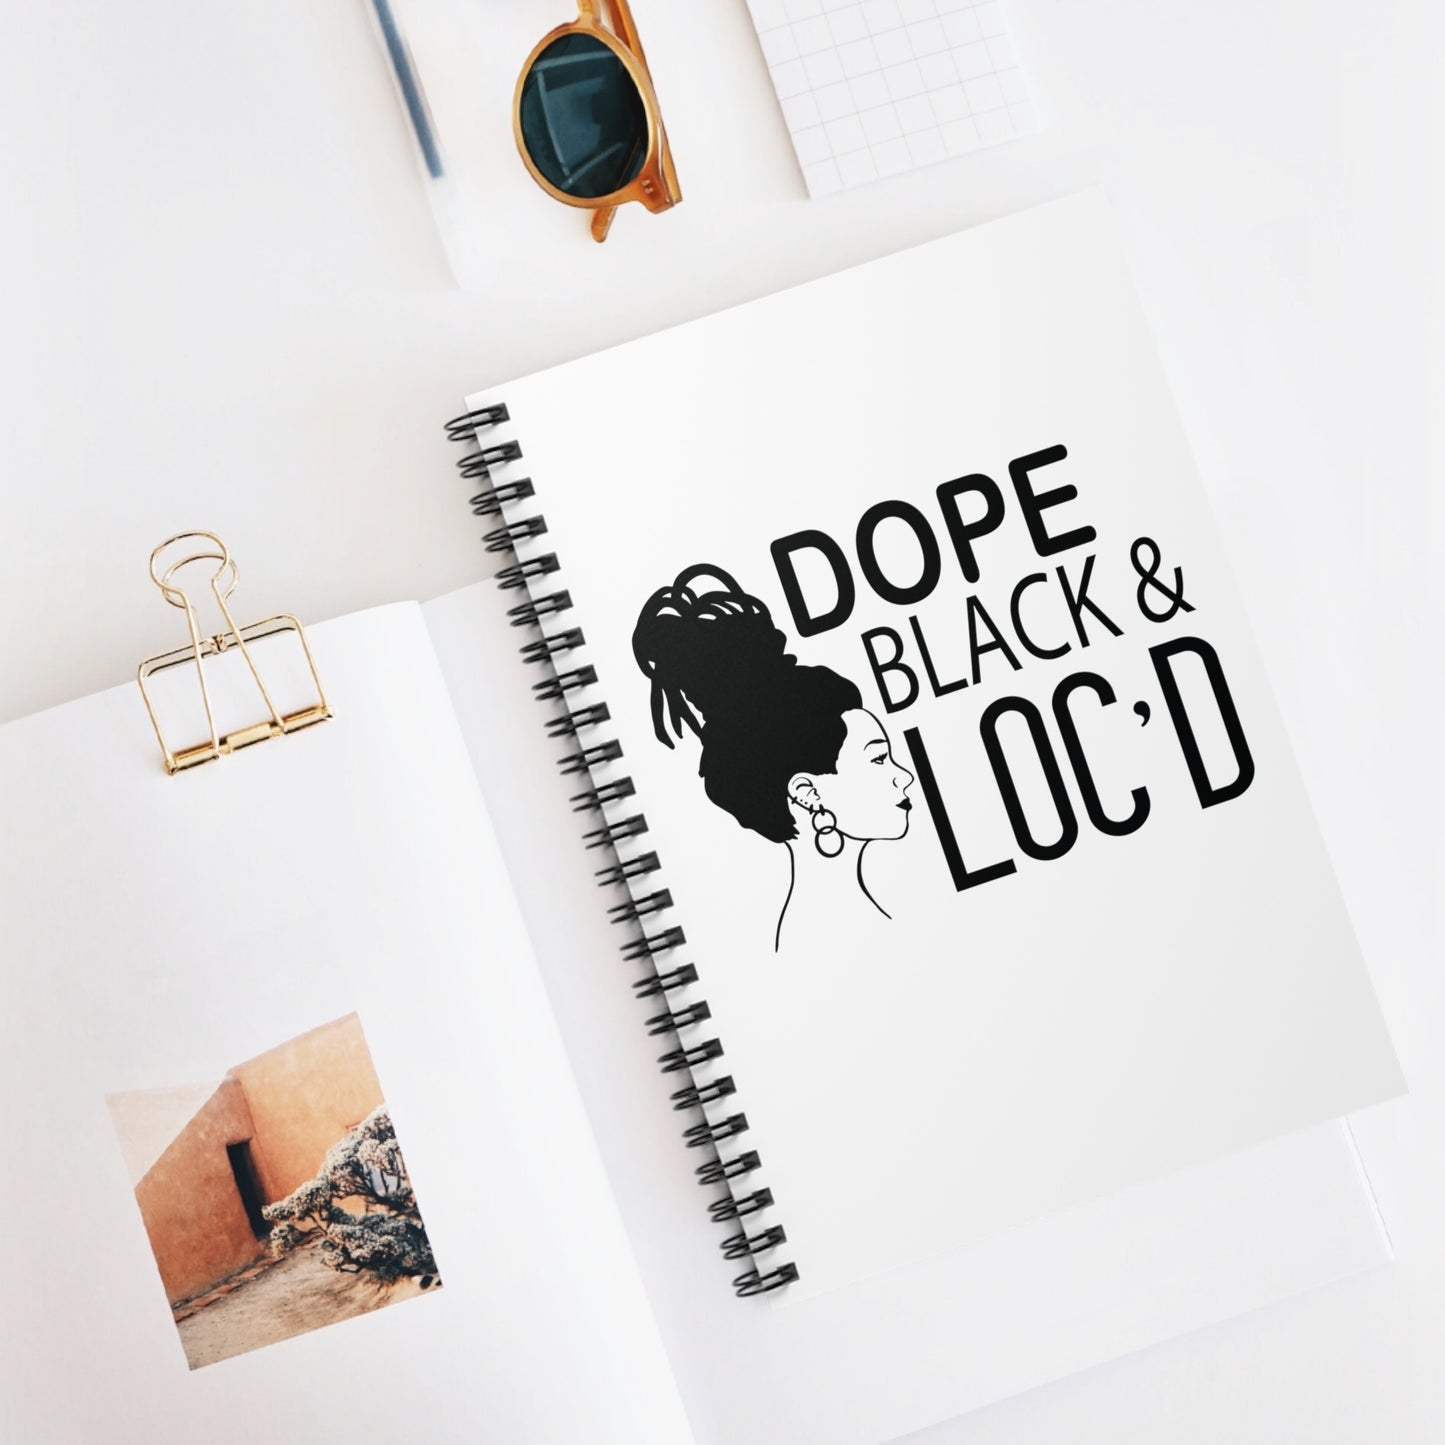 Dope Black & Loc'd Spiral Notebook - Ruled Line